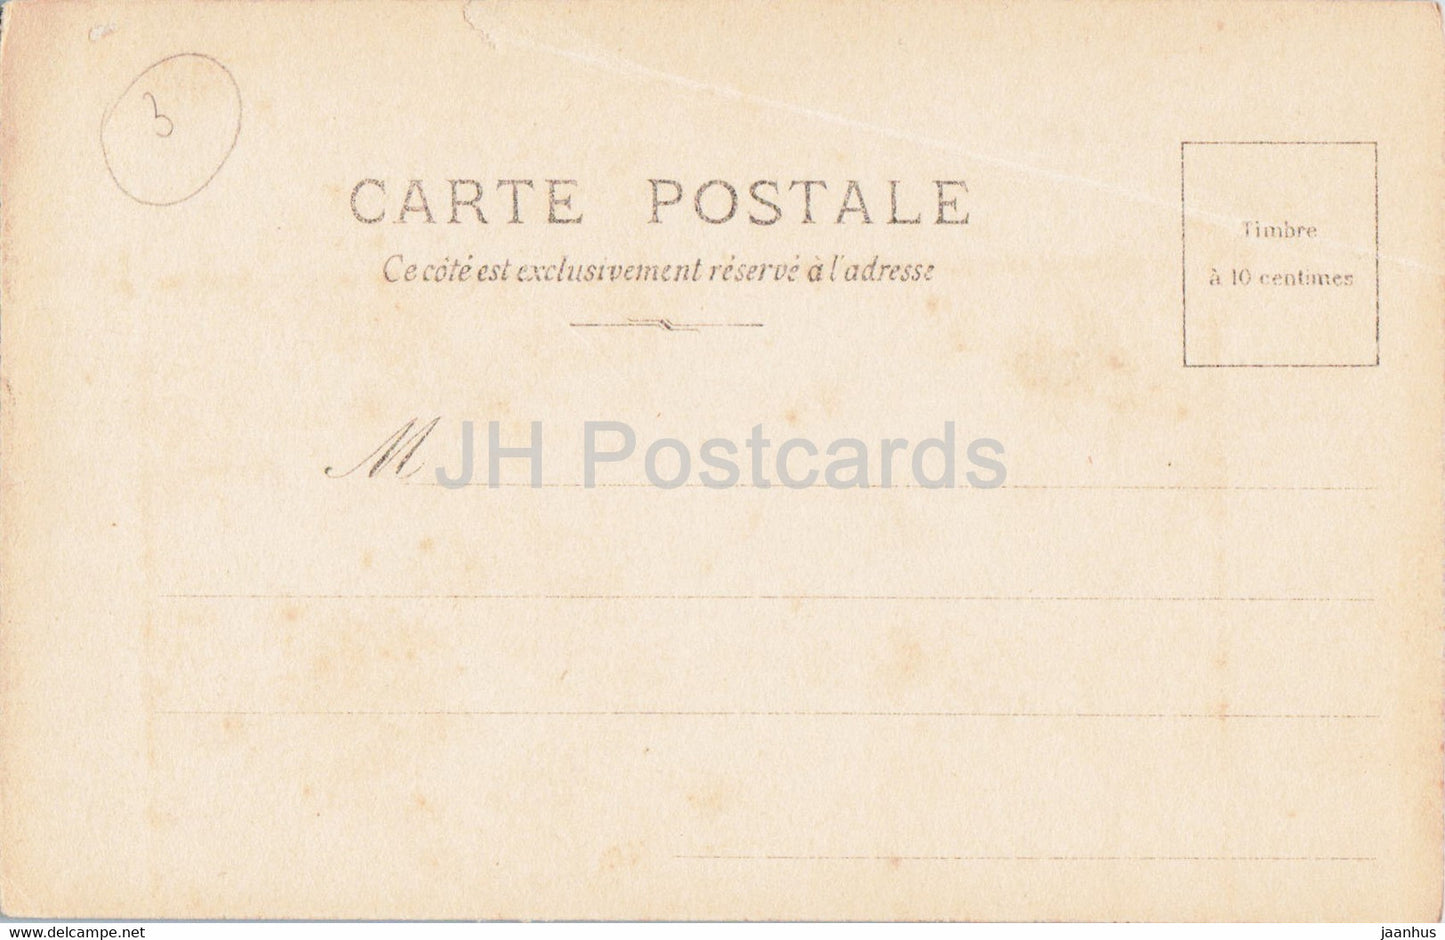 Easter Greeting Card - Souvenir de Paques - SIP - 20 - old postcard - France - unused